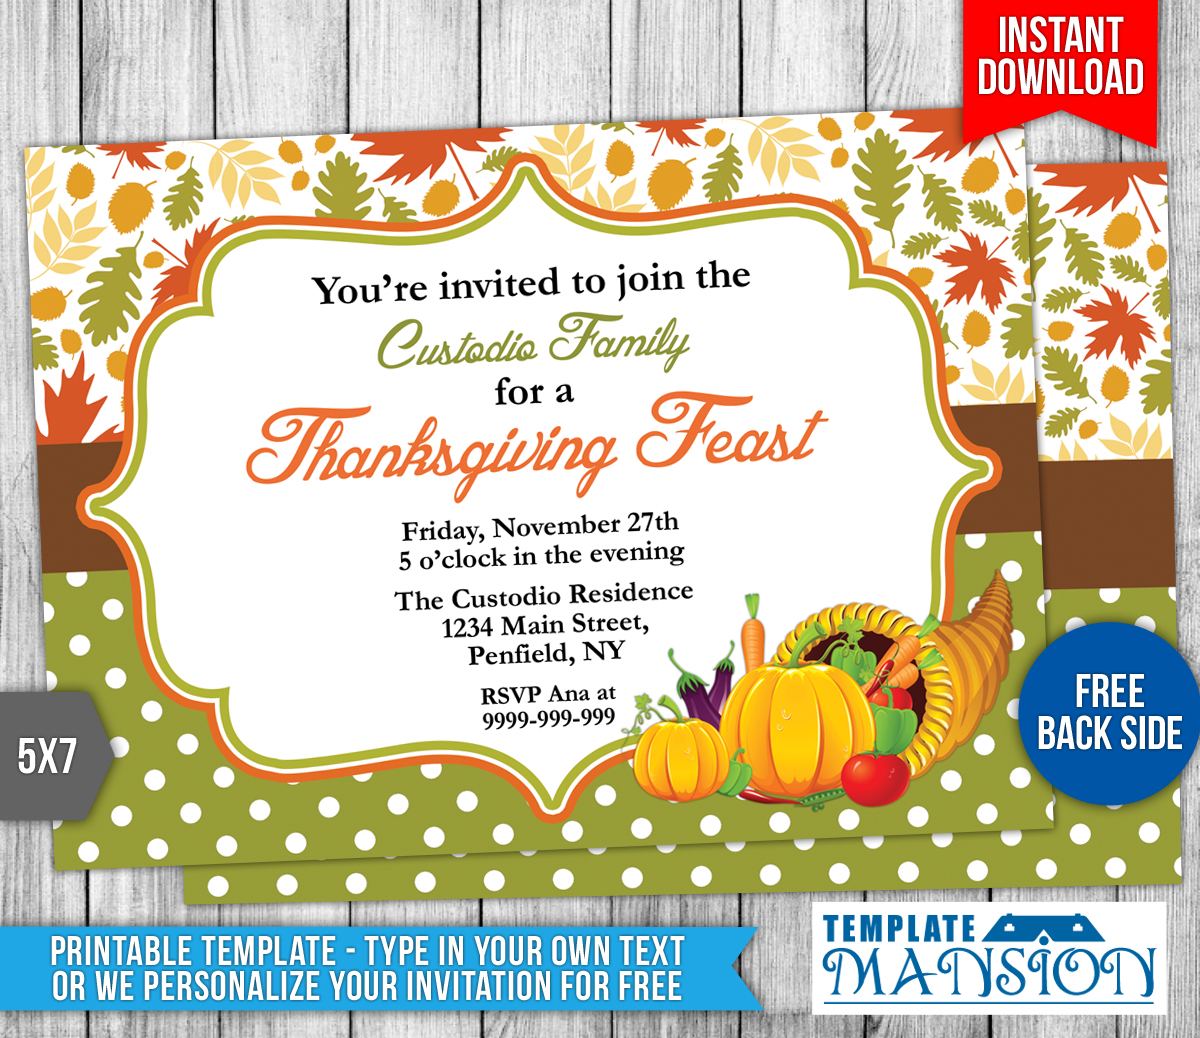 thanksgiving-invitation-template-2-by-templatemansion-on-deviantart